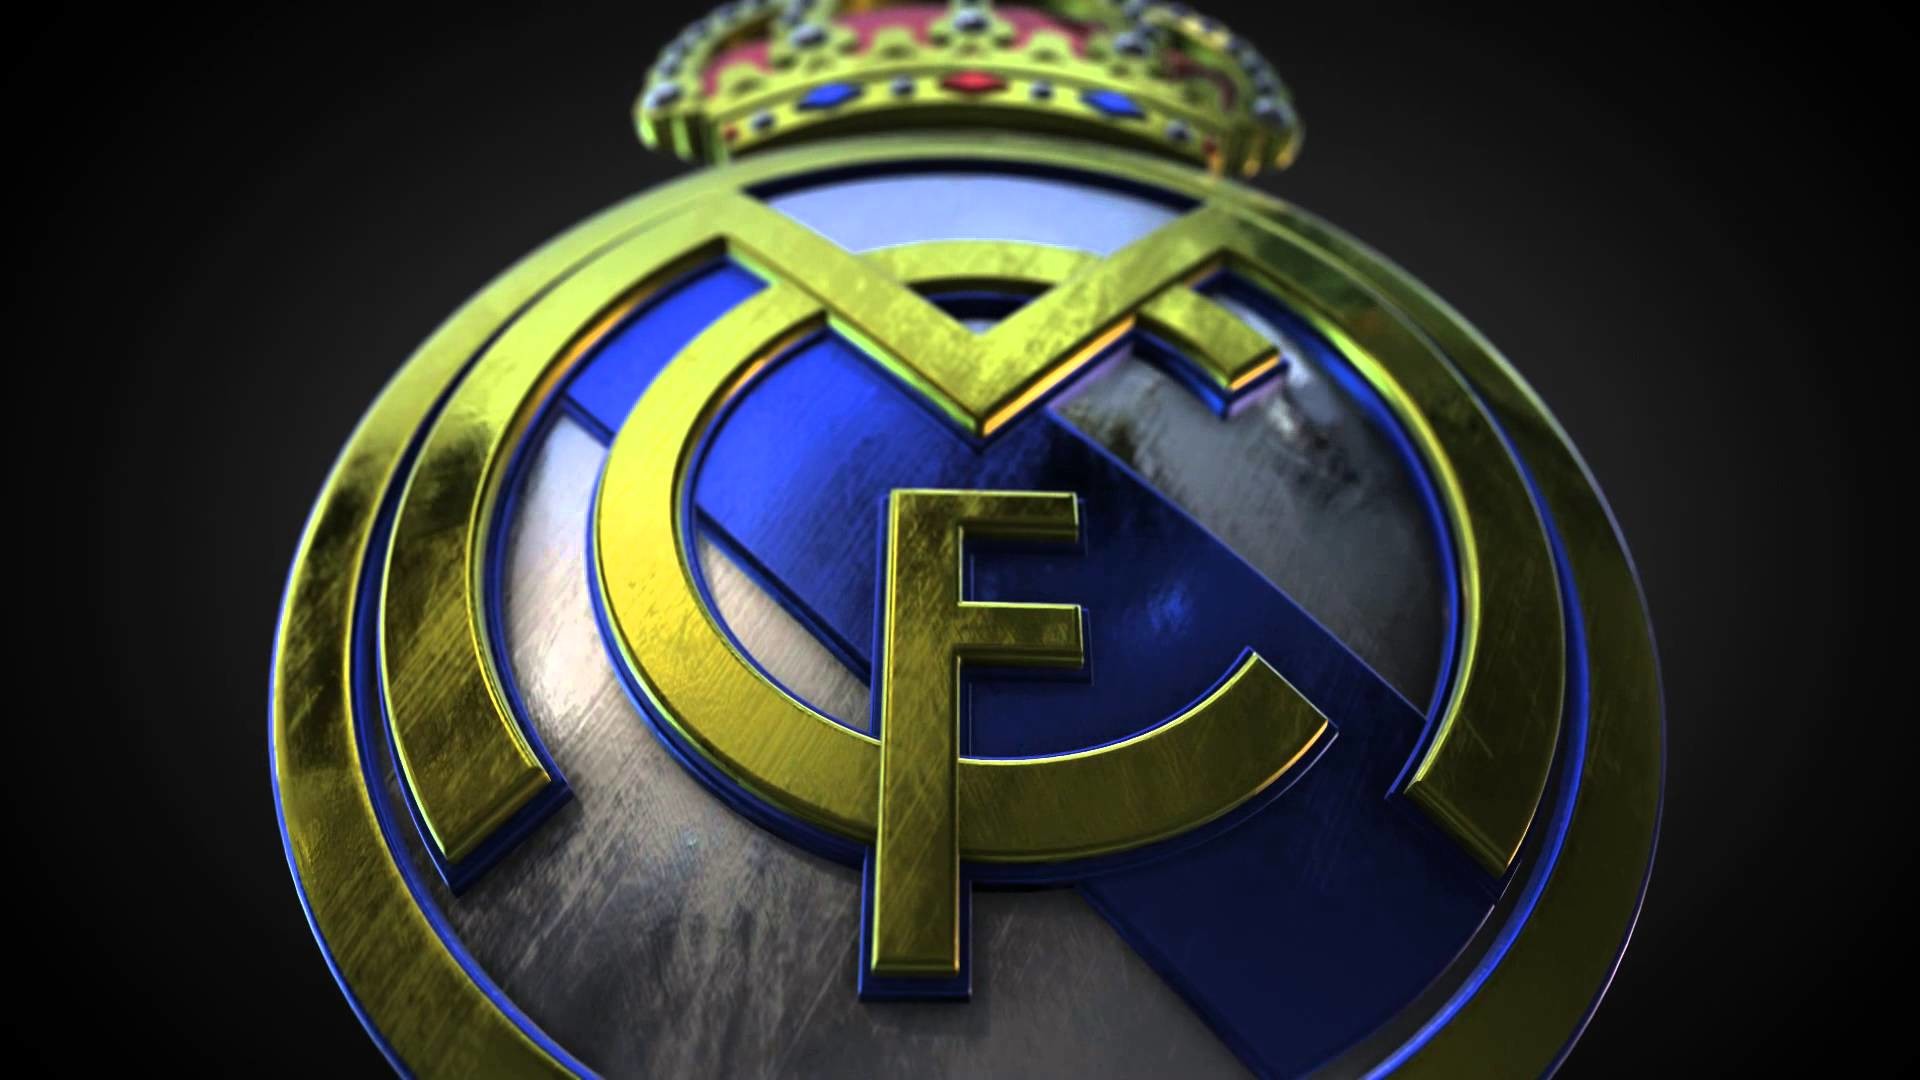 Real Madrid Wallpaper 3d Image